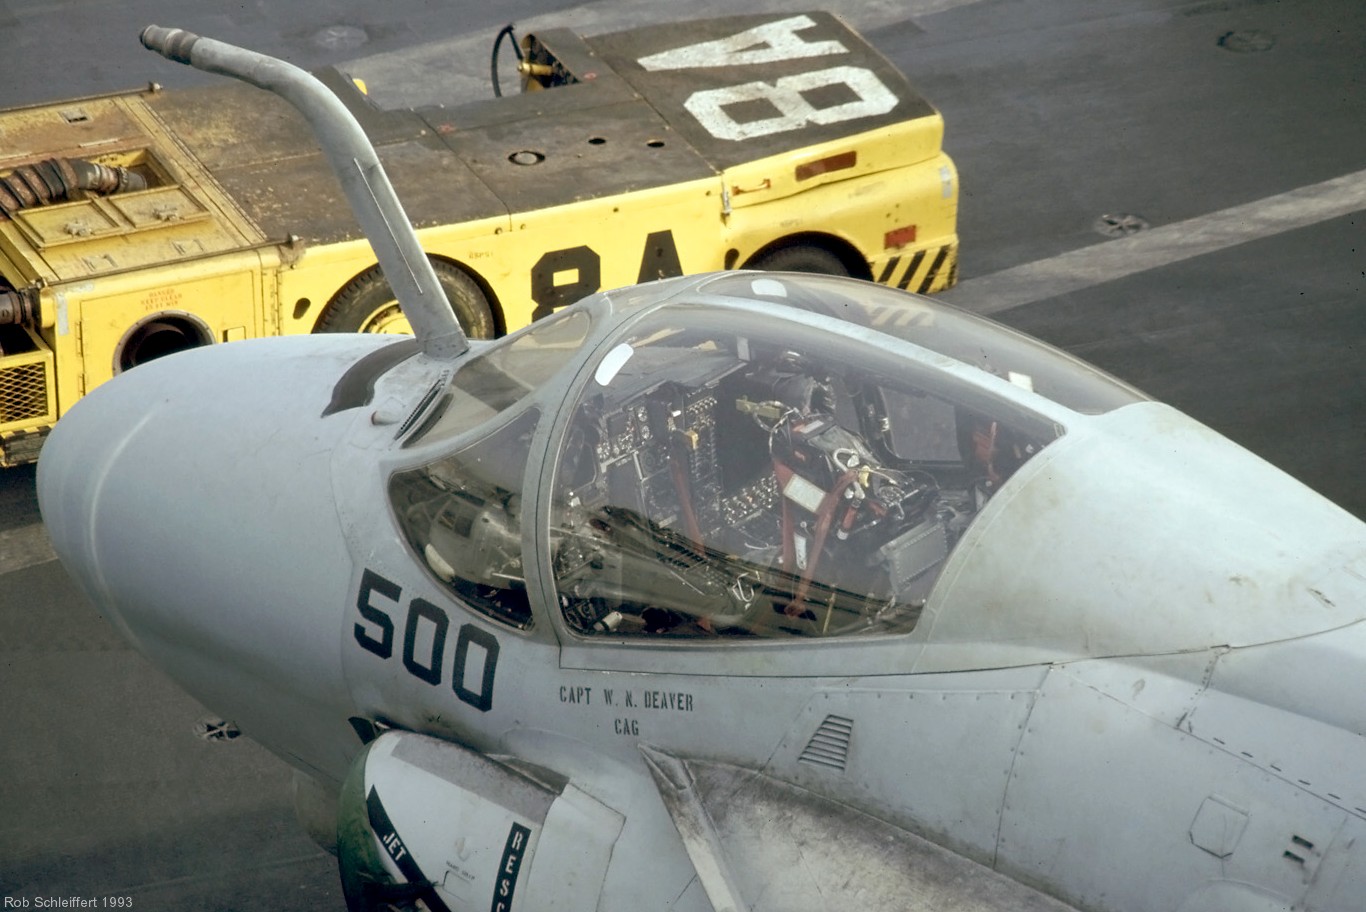 va-85 black falcons attack squadron us navy a-6e intruder carrier air wing cvw-1 uss america cv-66 11 cockpit view